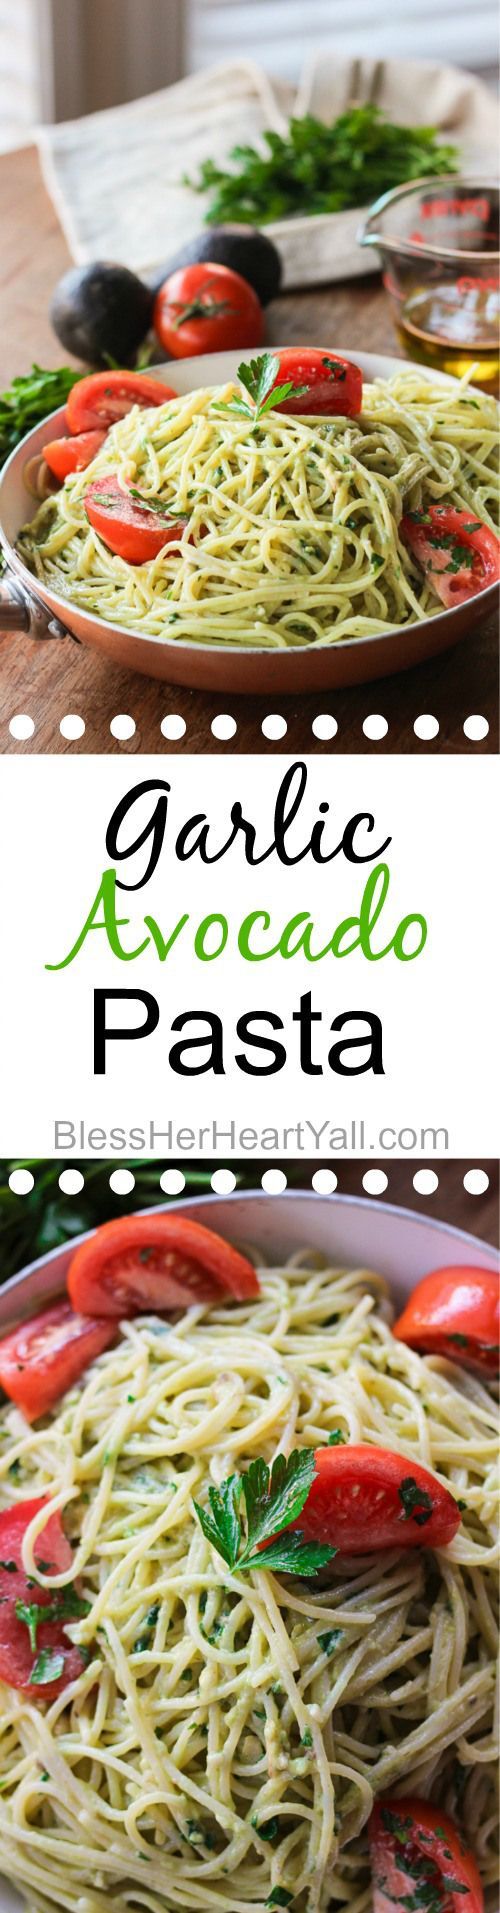 Garlic Avocado Pasta